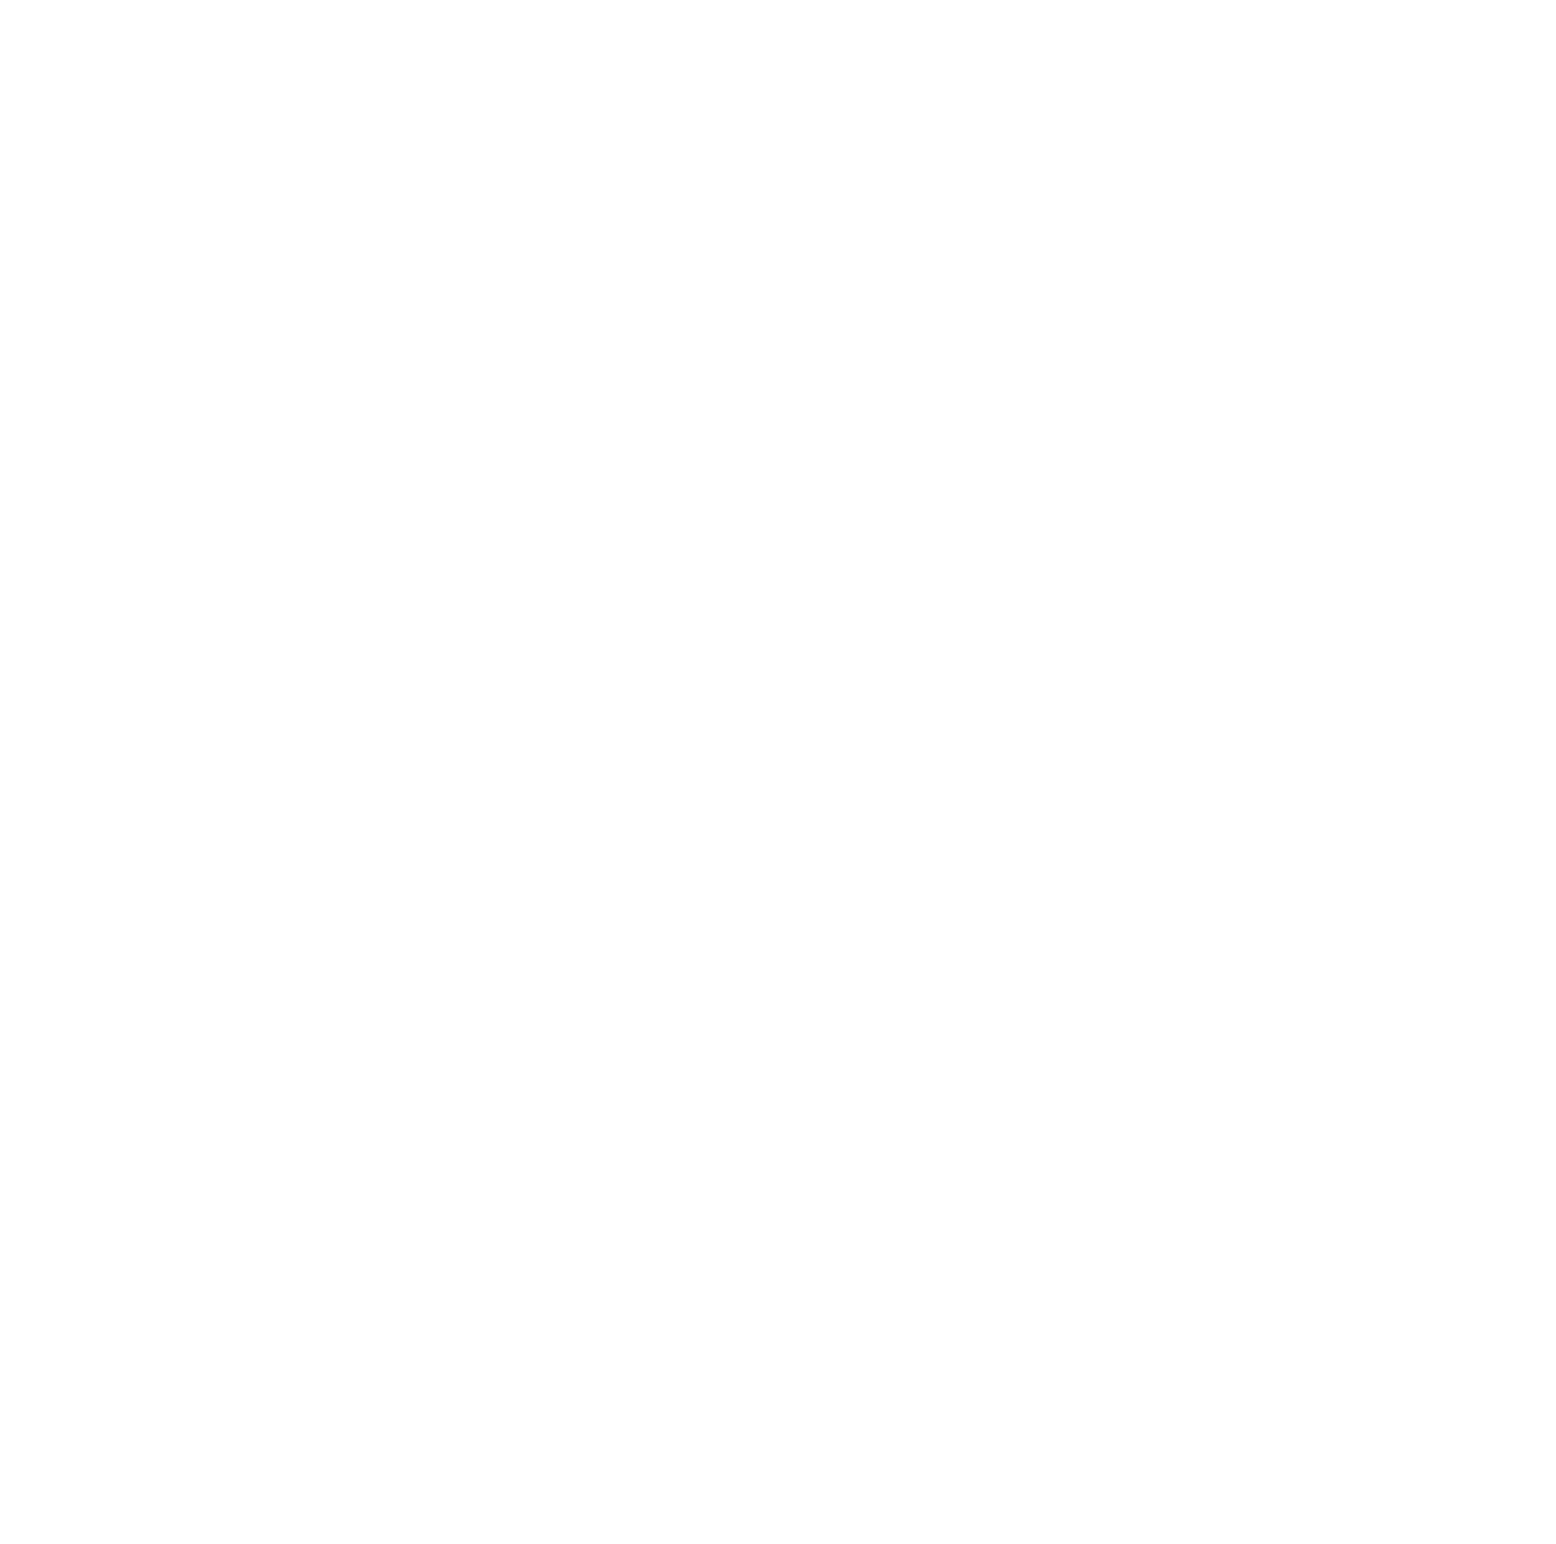 Lumi Rental Company logo for dark backgrounds (transparent PNG)